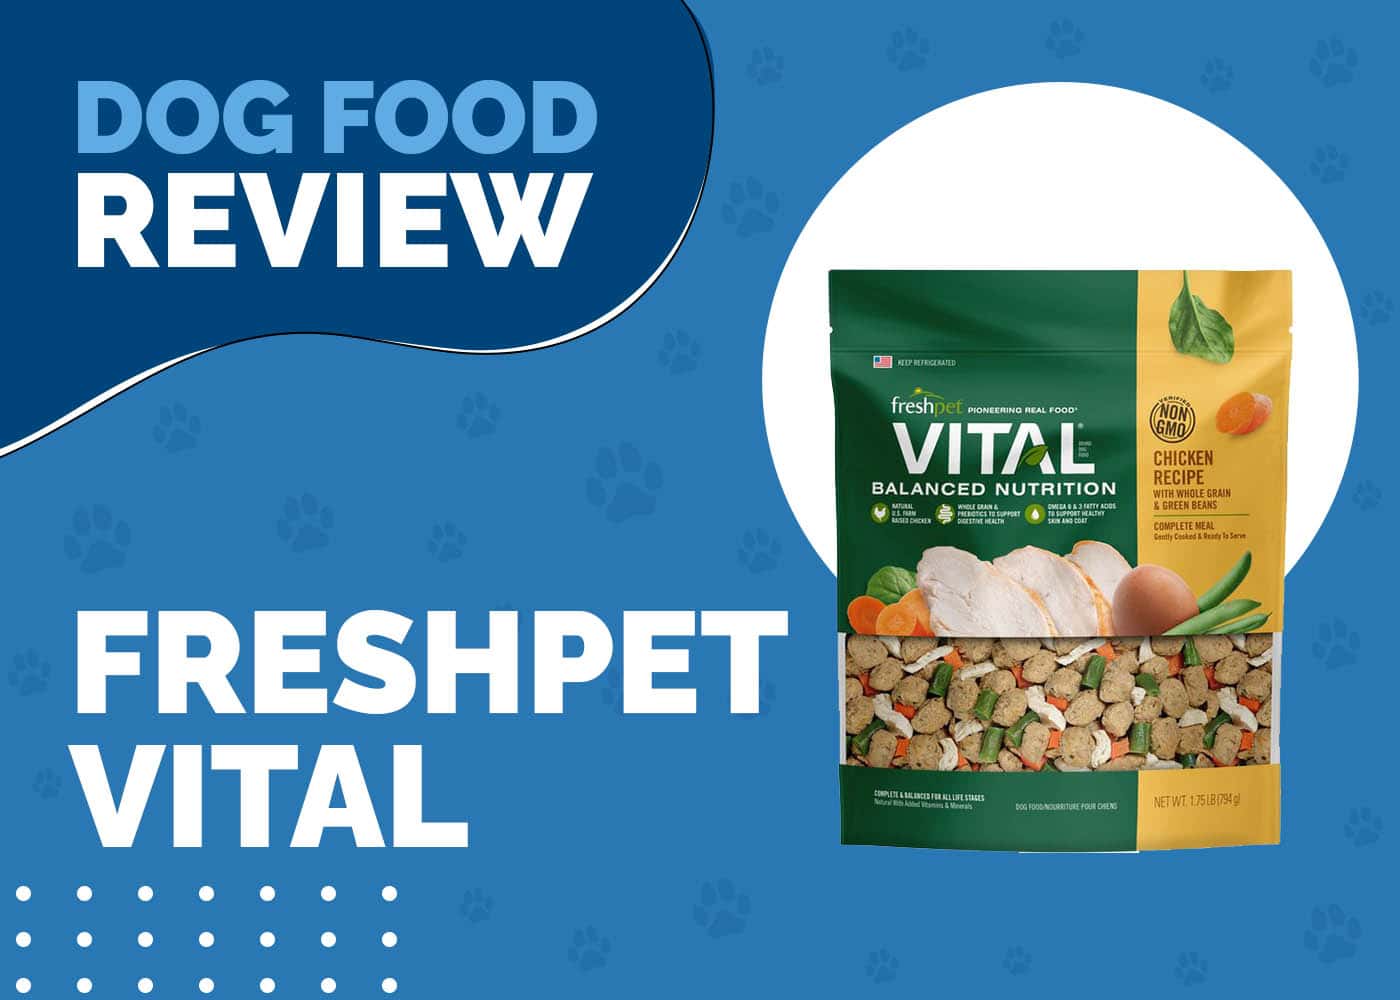 Freshpet Vital Dog Food Review